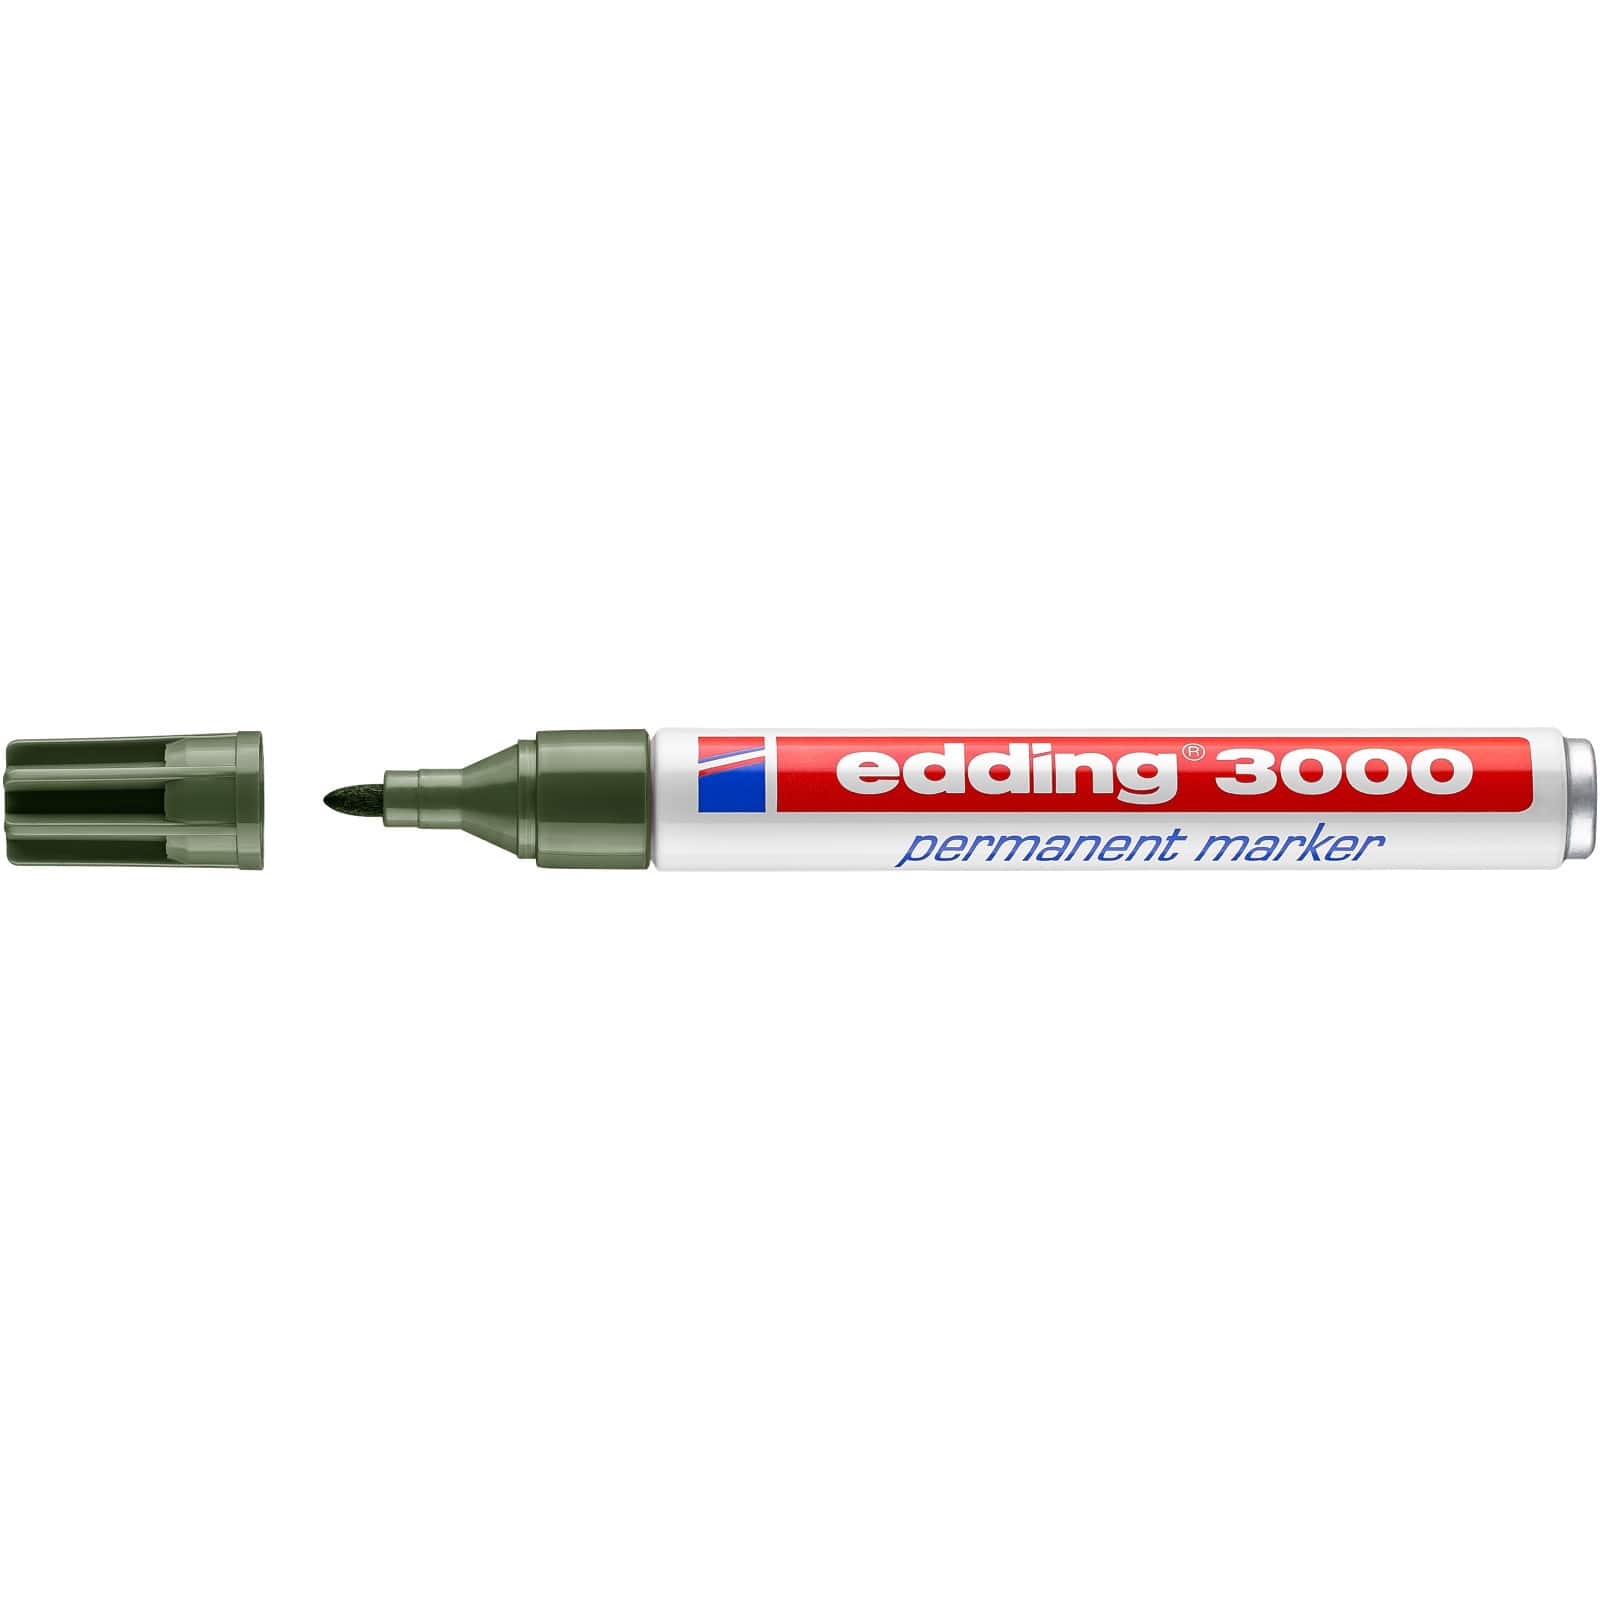 edding® 3000 Permanent Marker